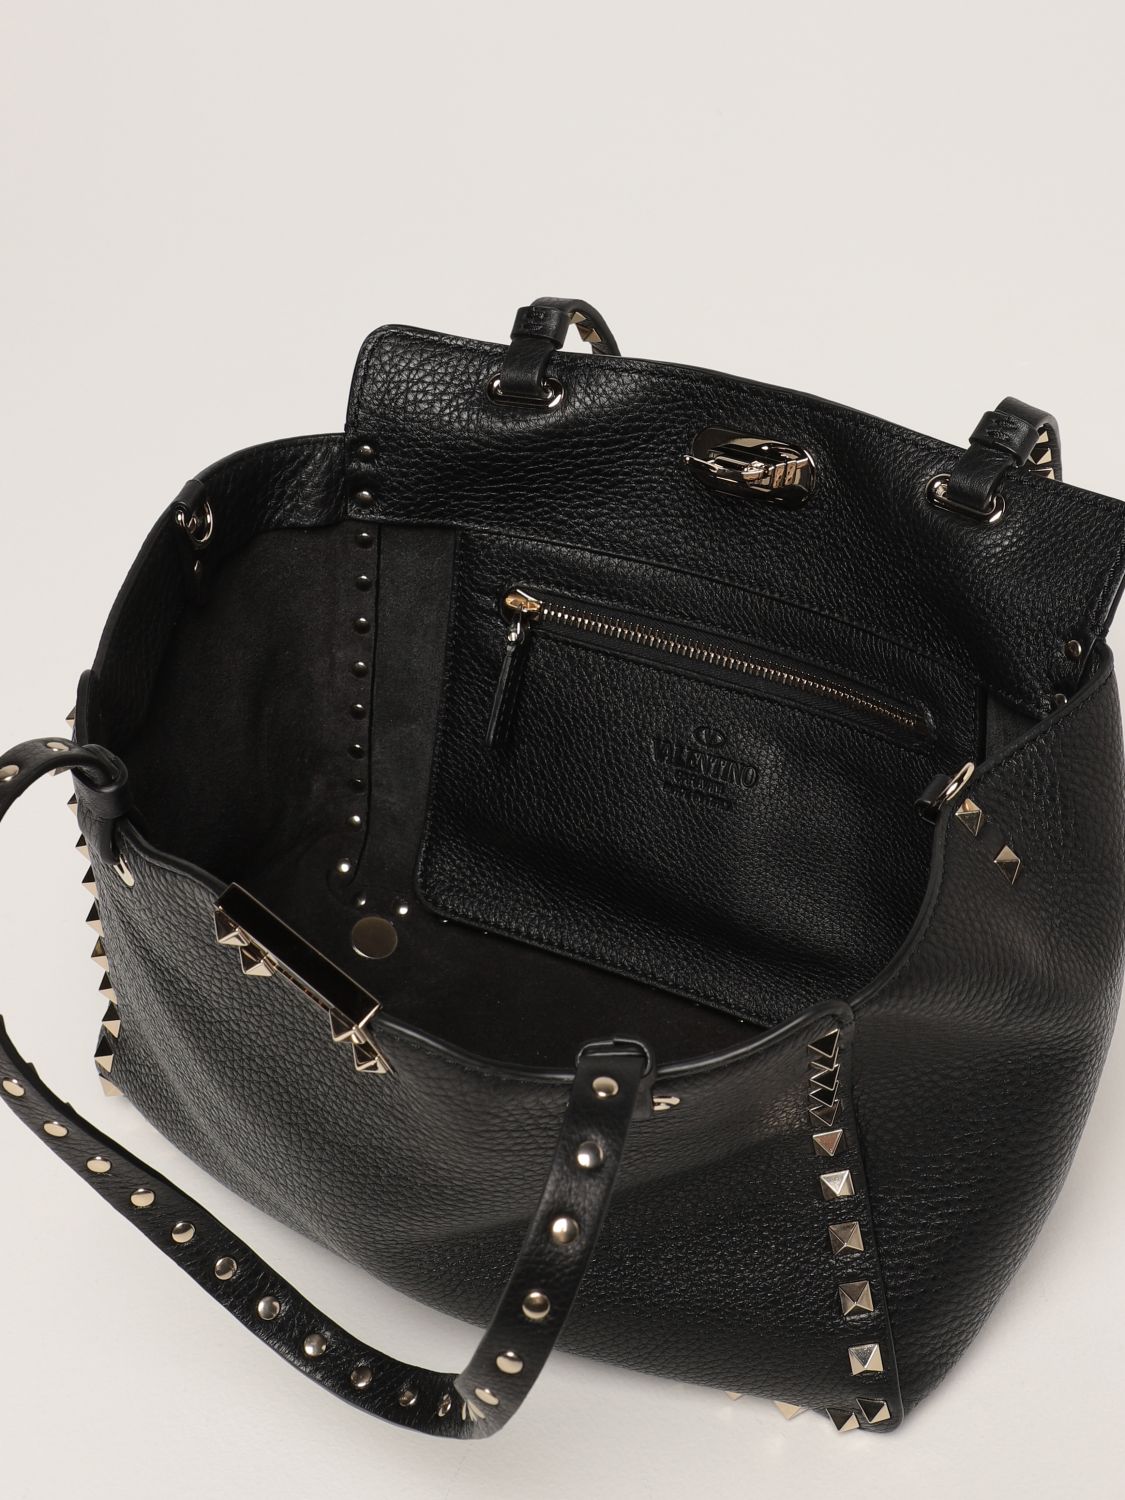 VALENTINO GARAVANI: Rockstud bag in grained leather - Black  Valentino  Garavani mini bag 3W2B0809VSF online at